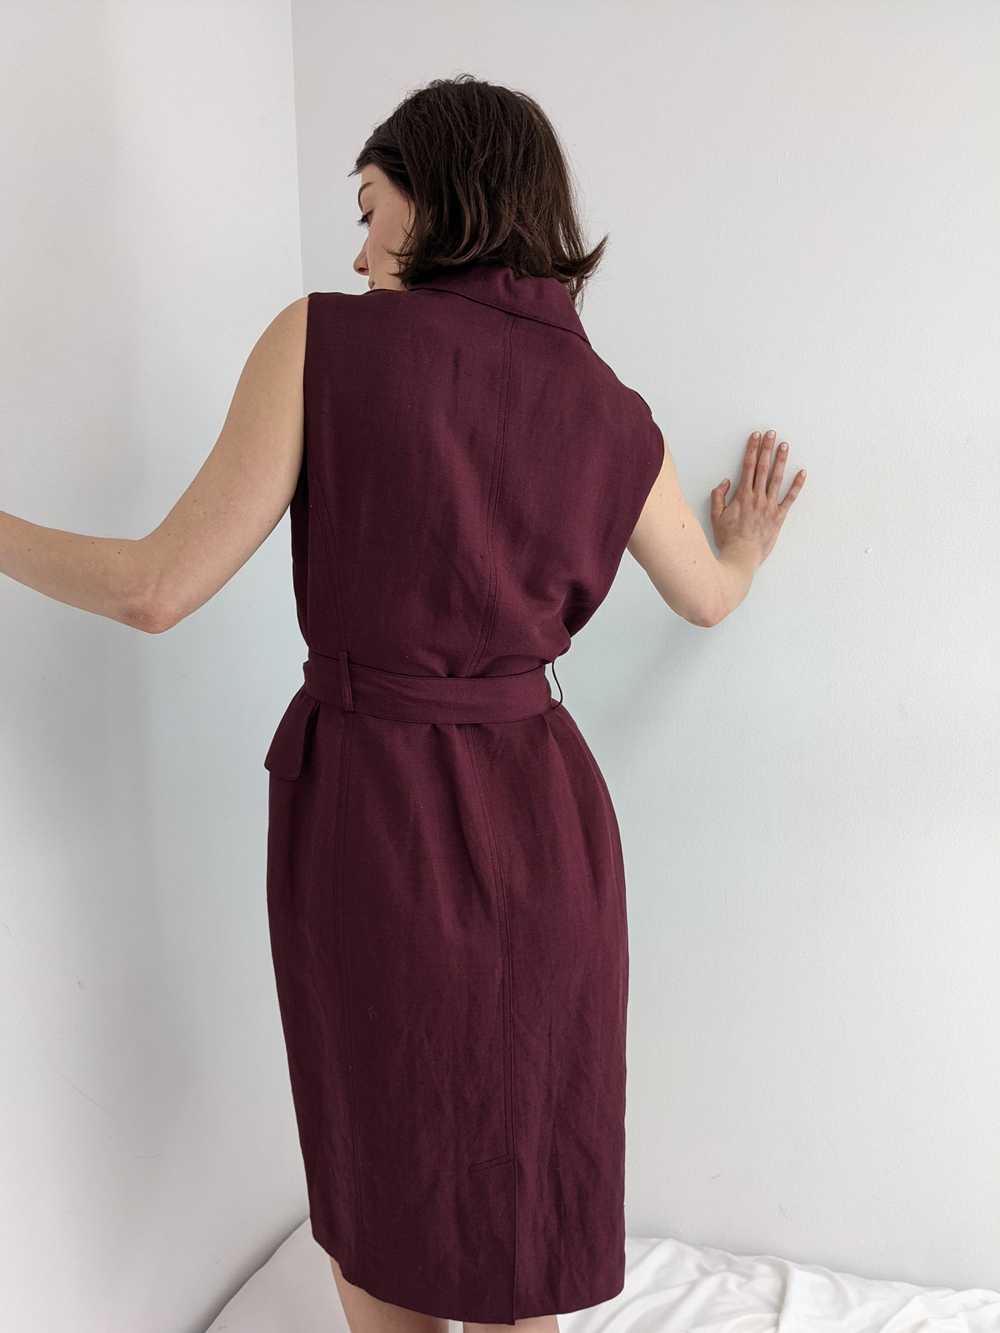 Vintage Merlot Woven Linen Dress - image 2